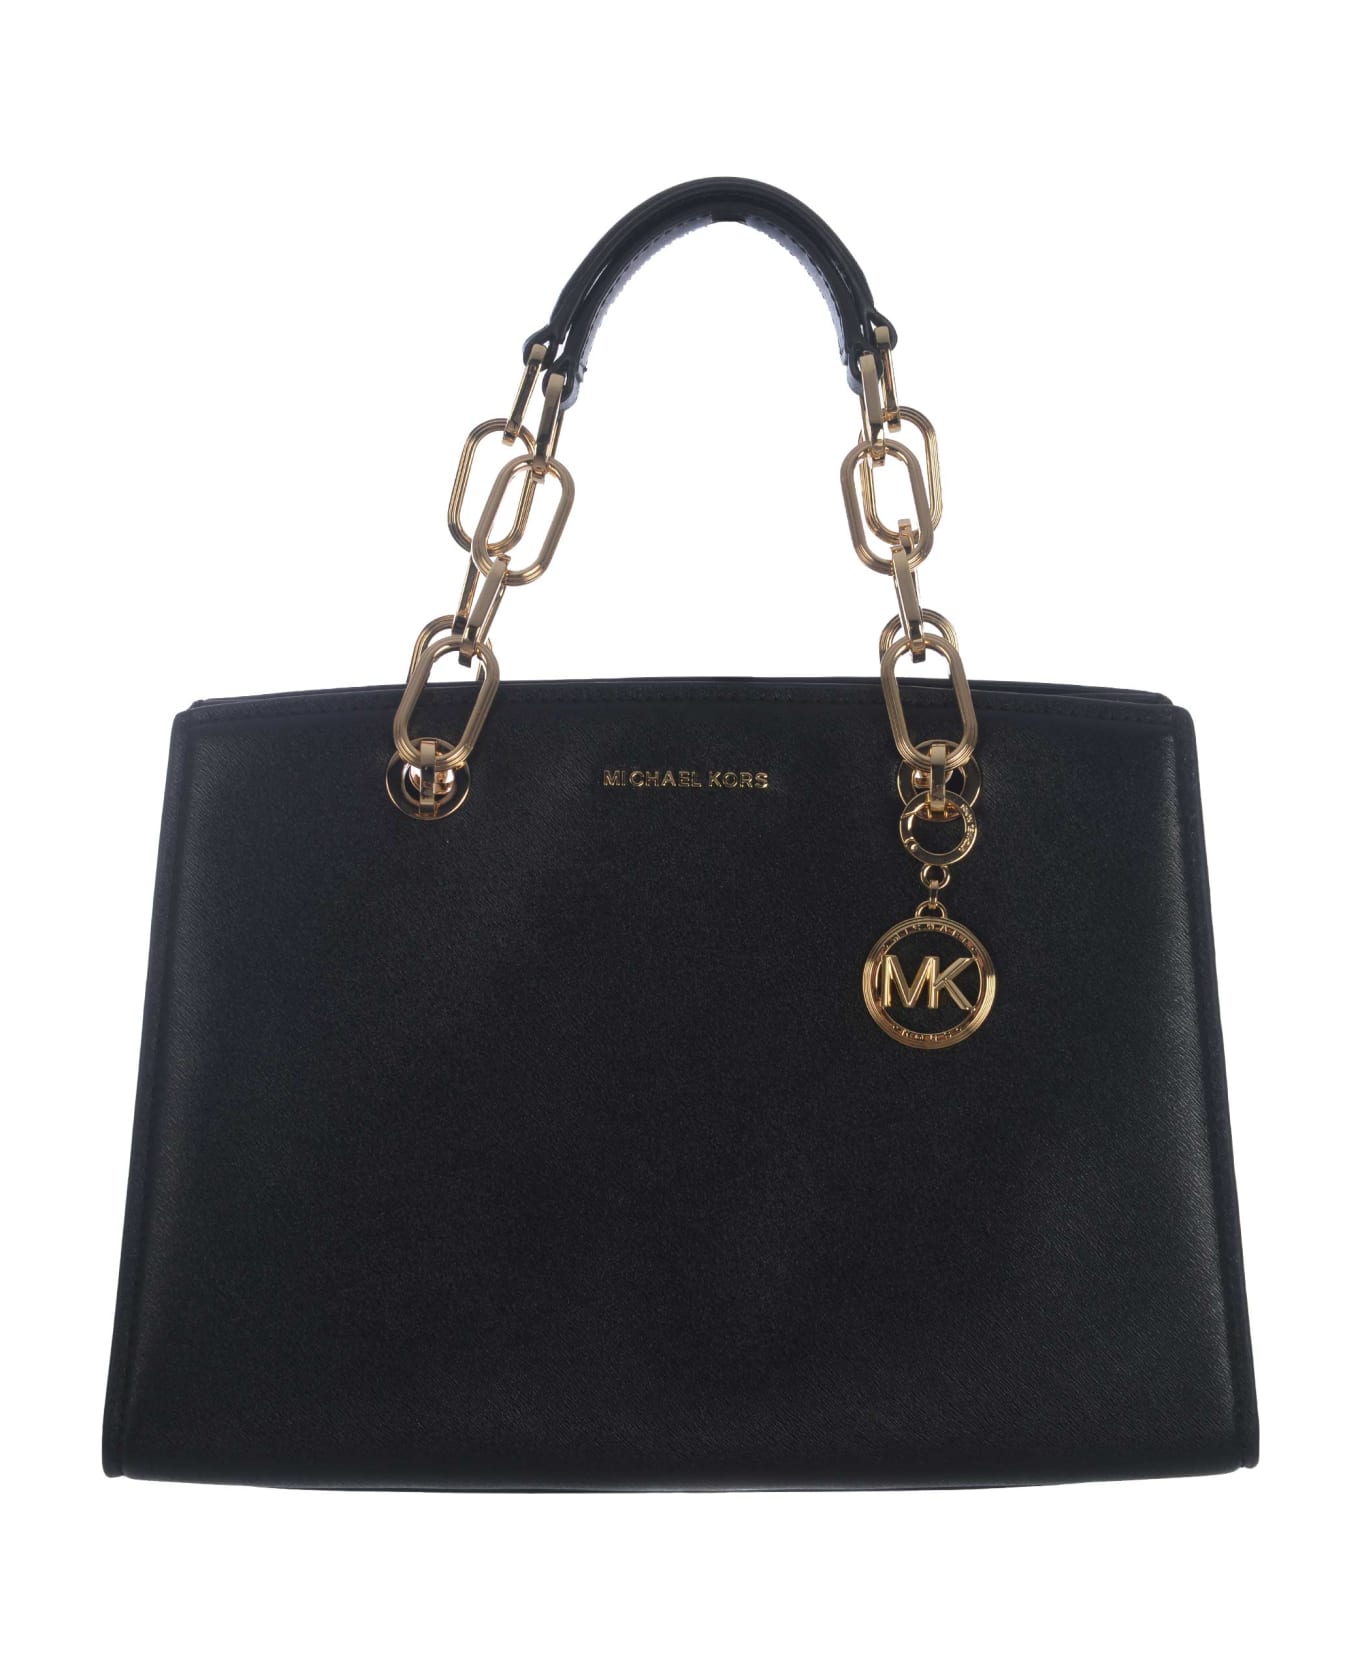 MICHAEL Michael Kors Cynthia Leather Bag - Nero